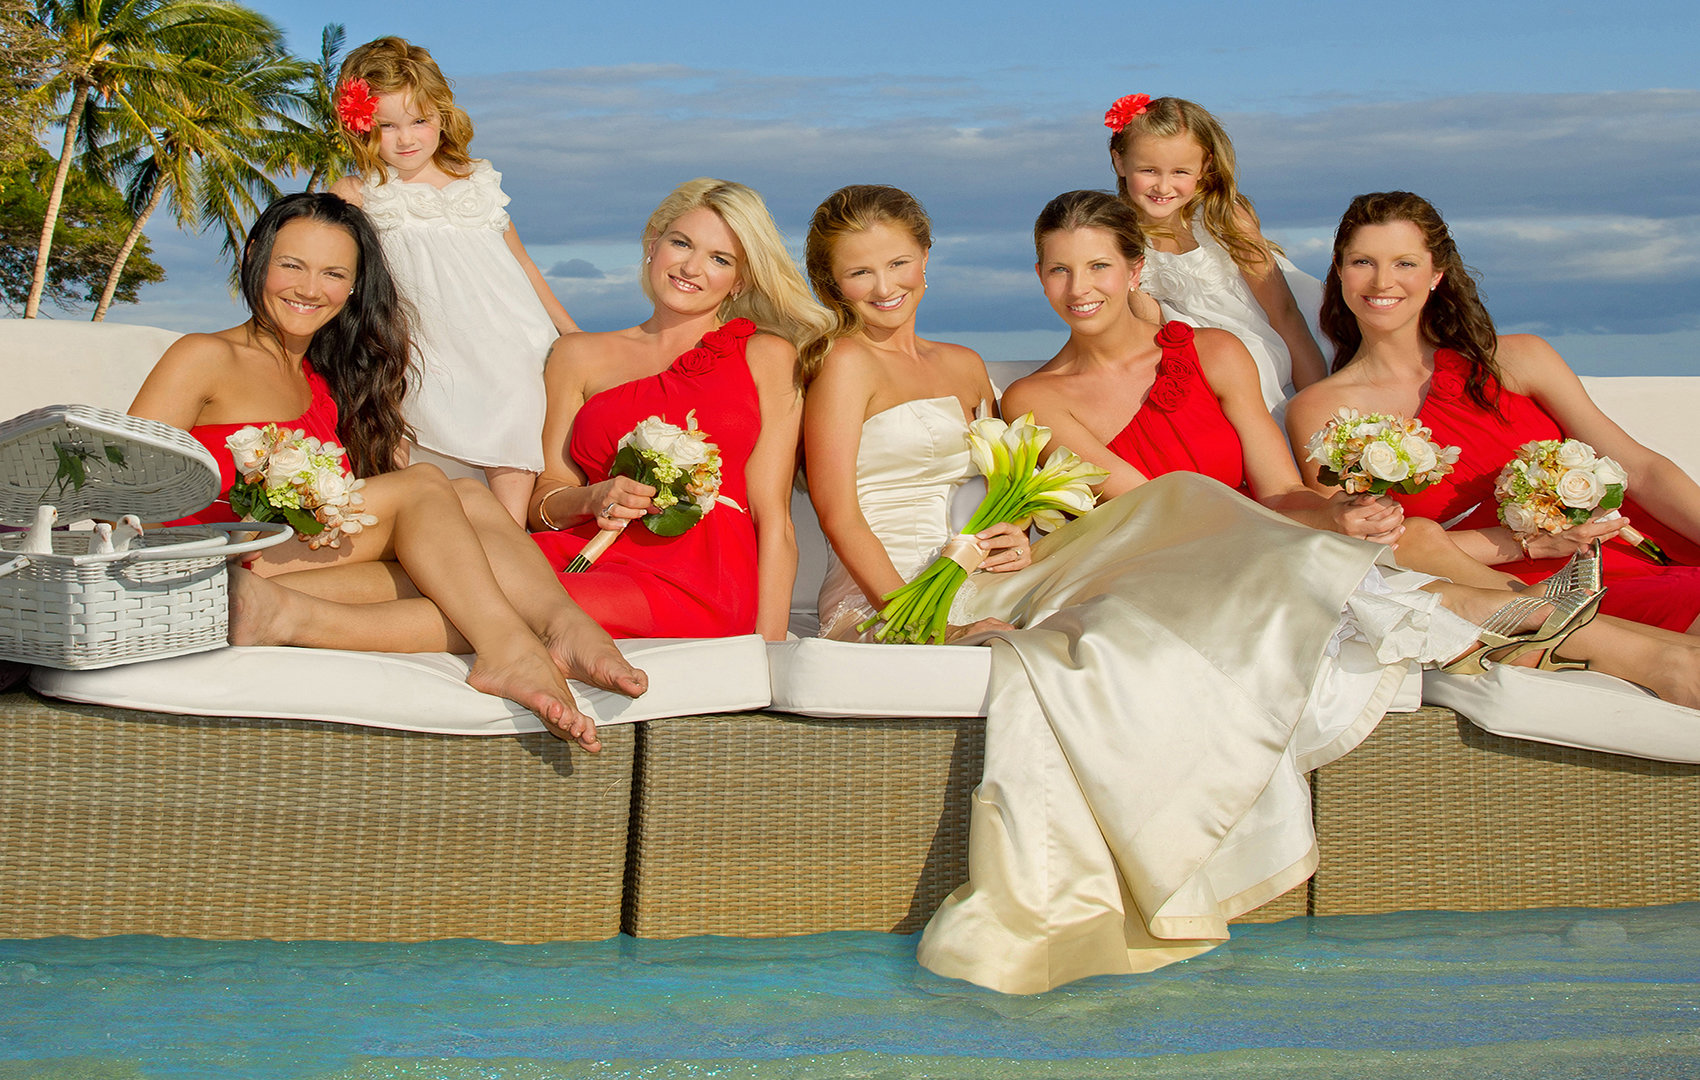 Maui wedding photography